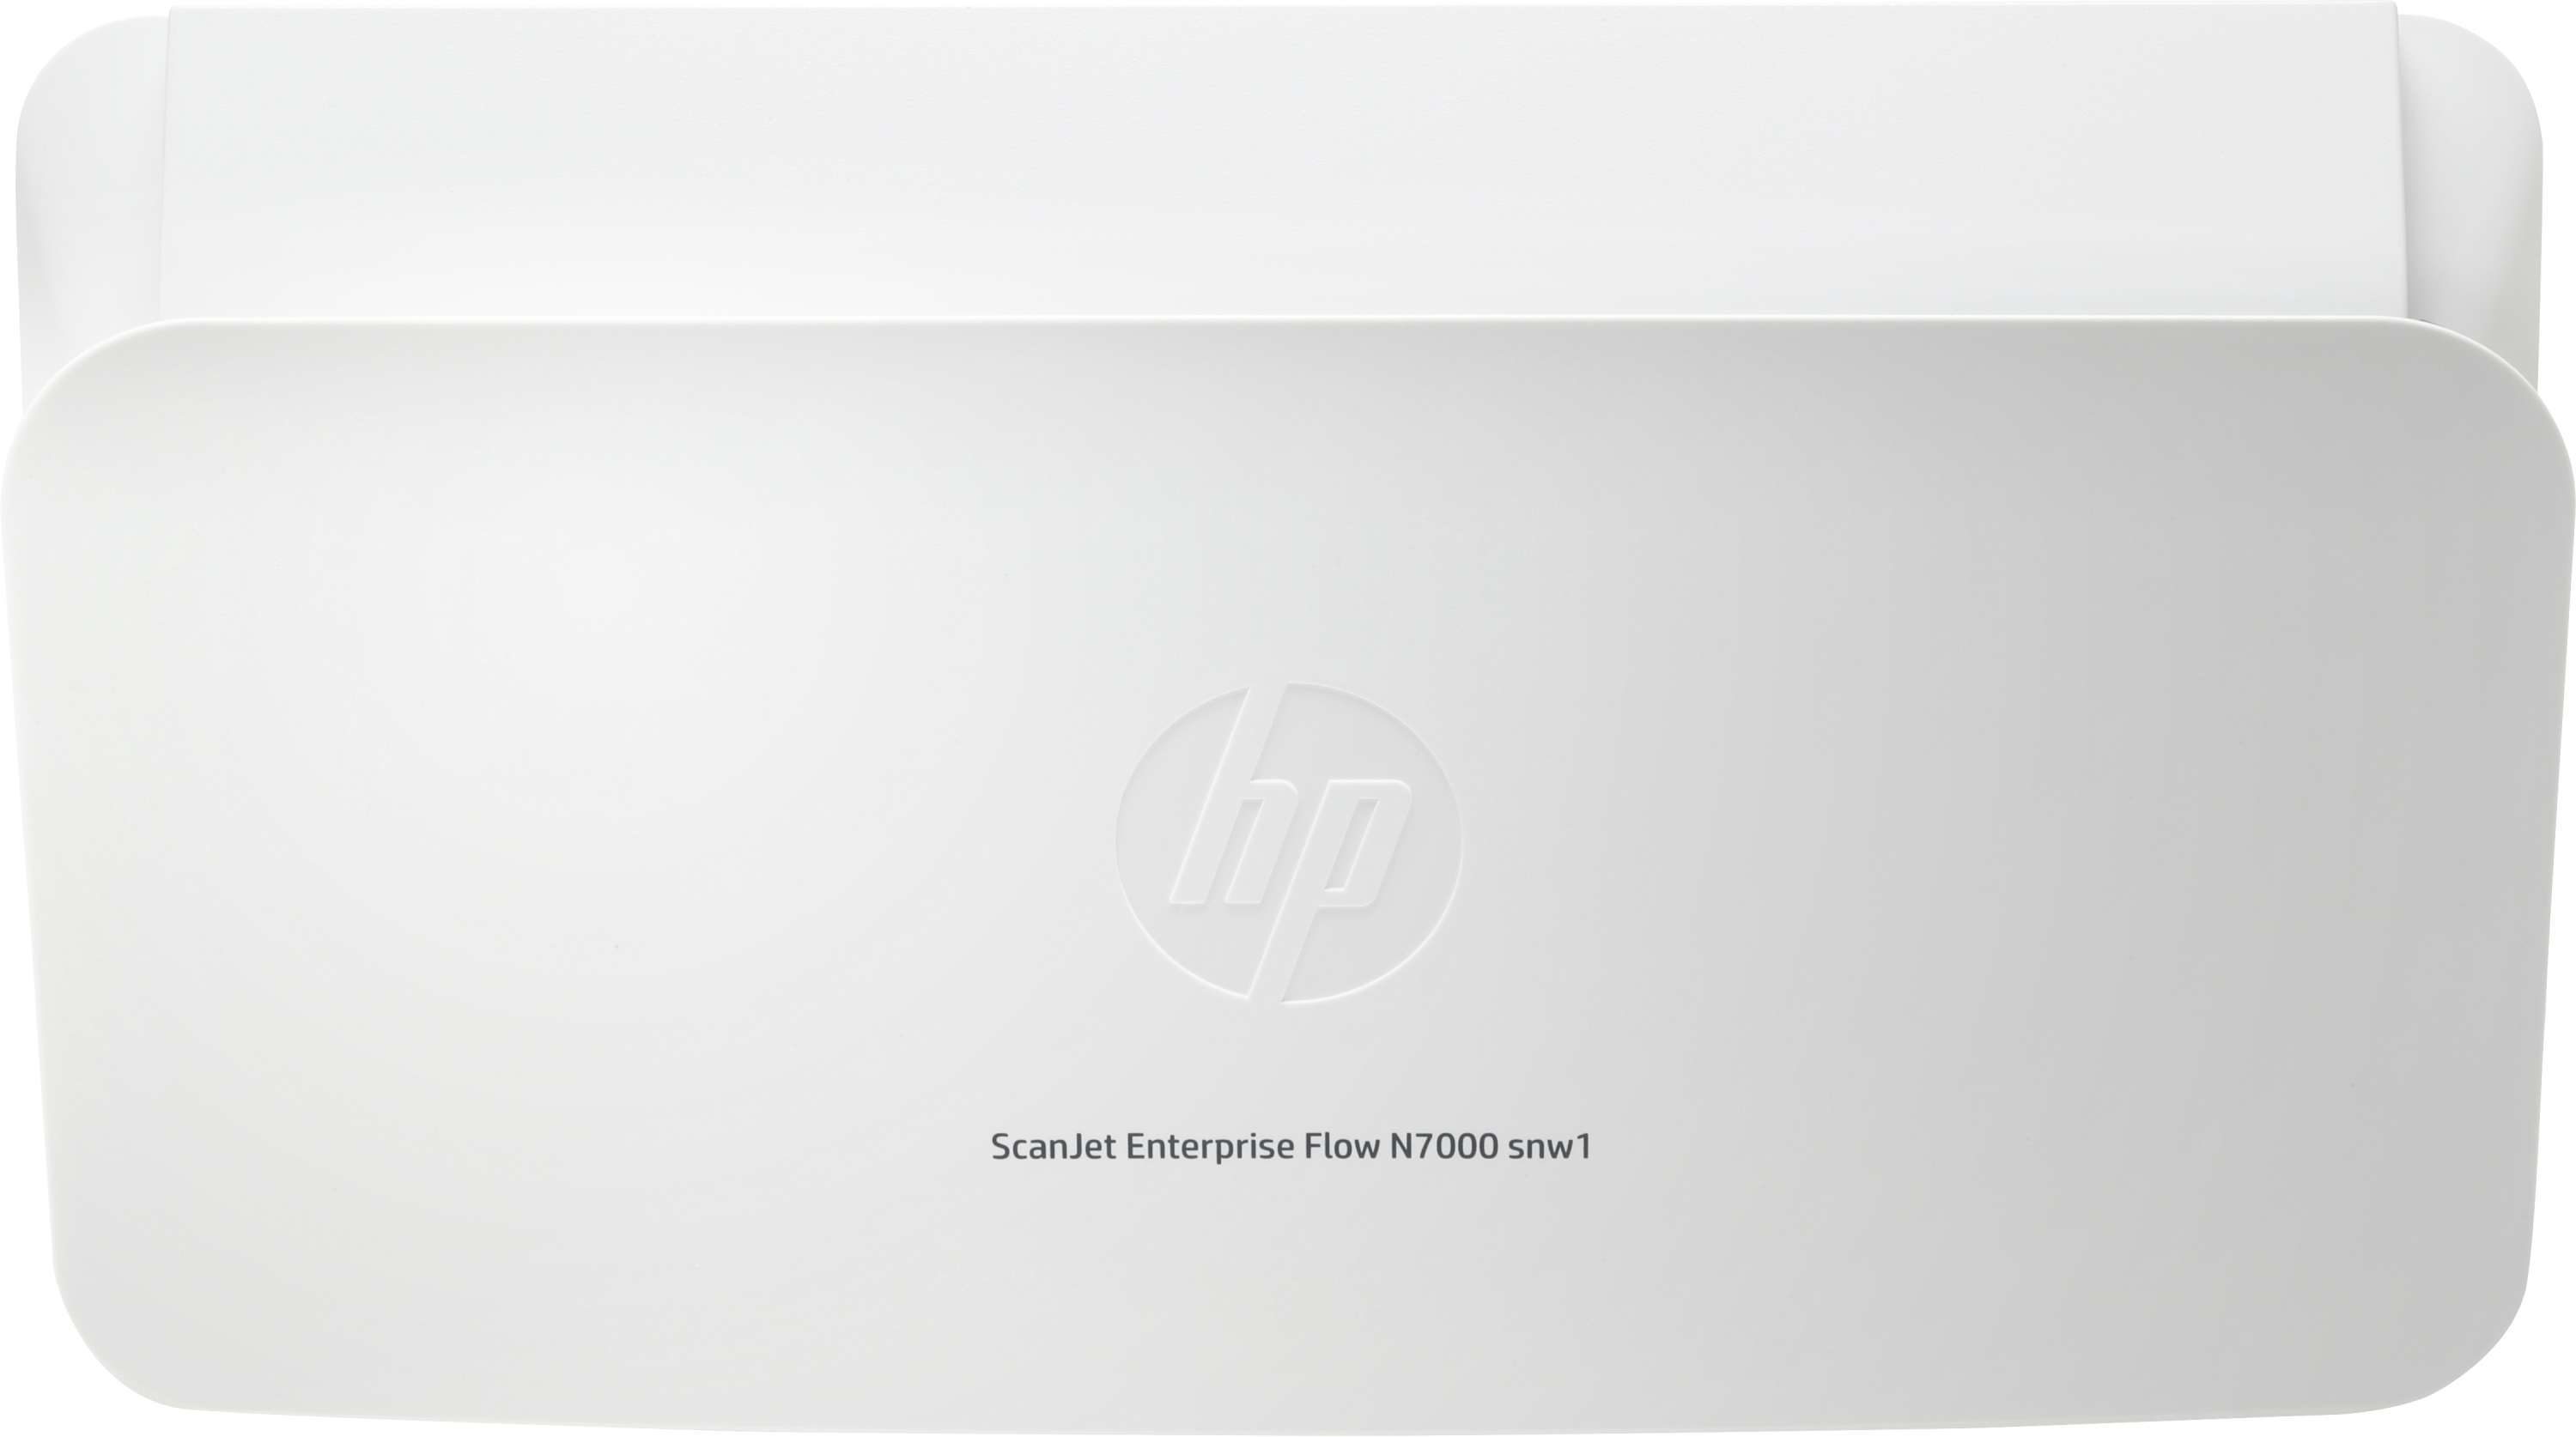 HP ScanJet Enterprise Flow N7000 snw1 Scanner, New, 6FW10A#BGJ, White - image 2 of 2